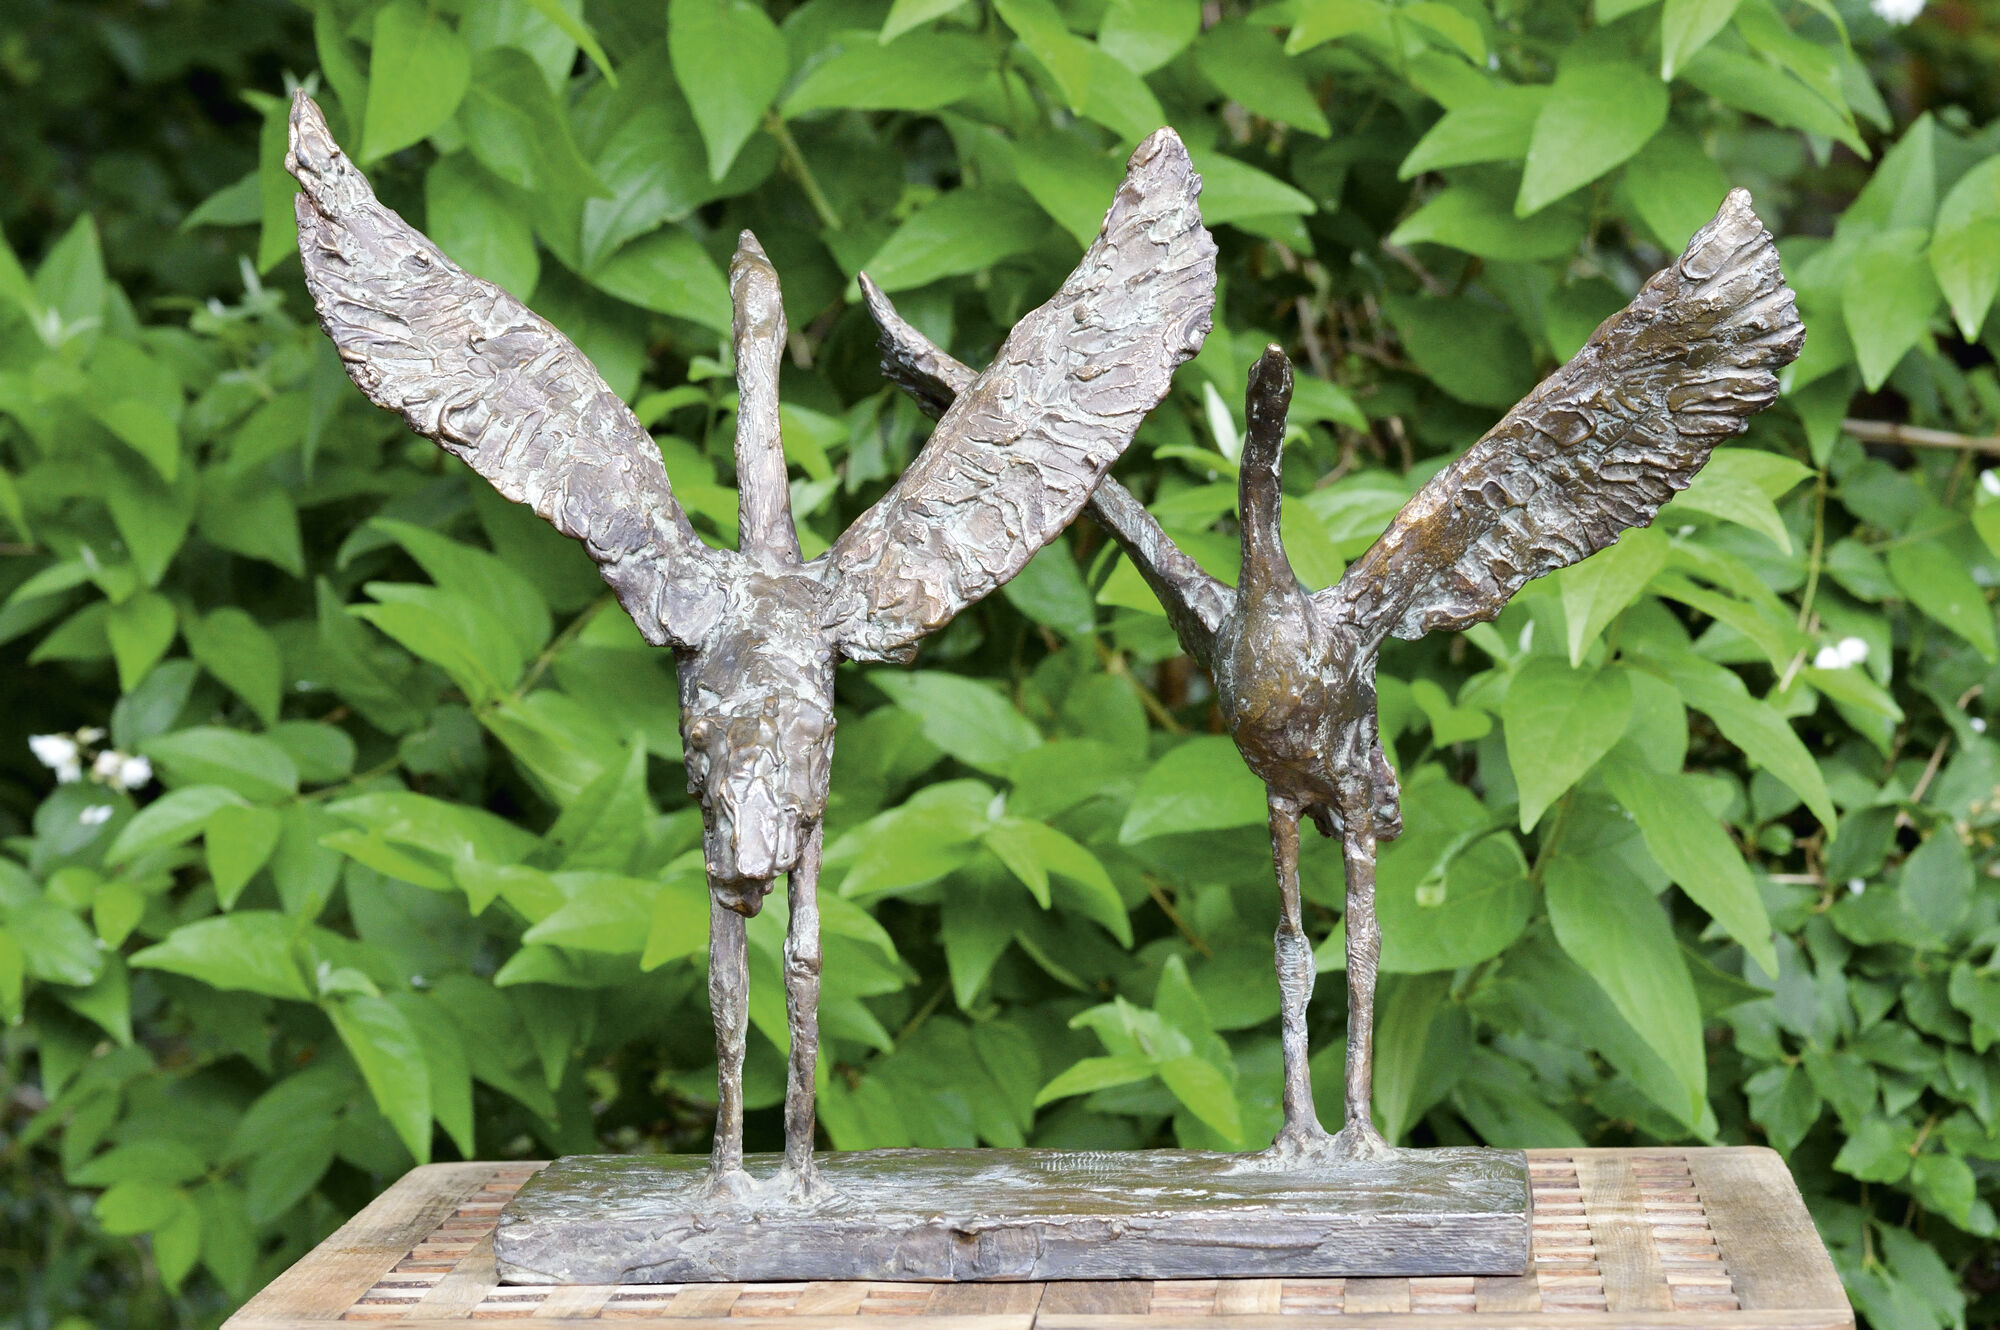 Sculpture "Group of Cranes" (2017), bronze by Thomas Jastram